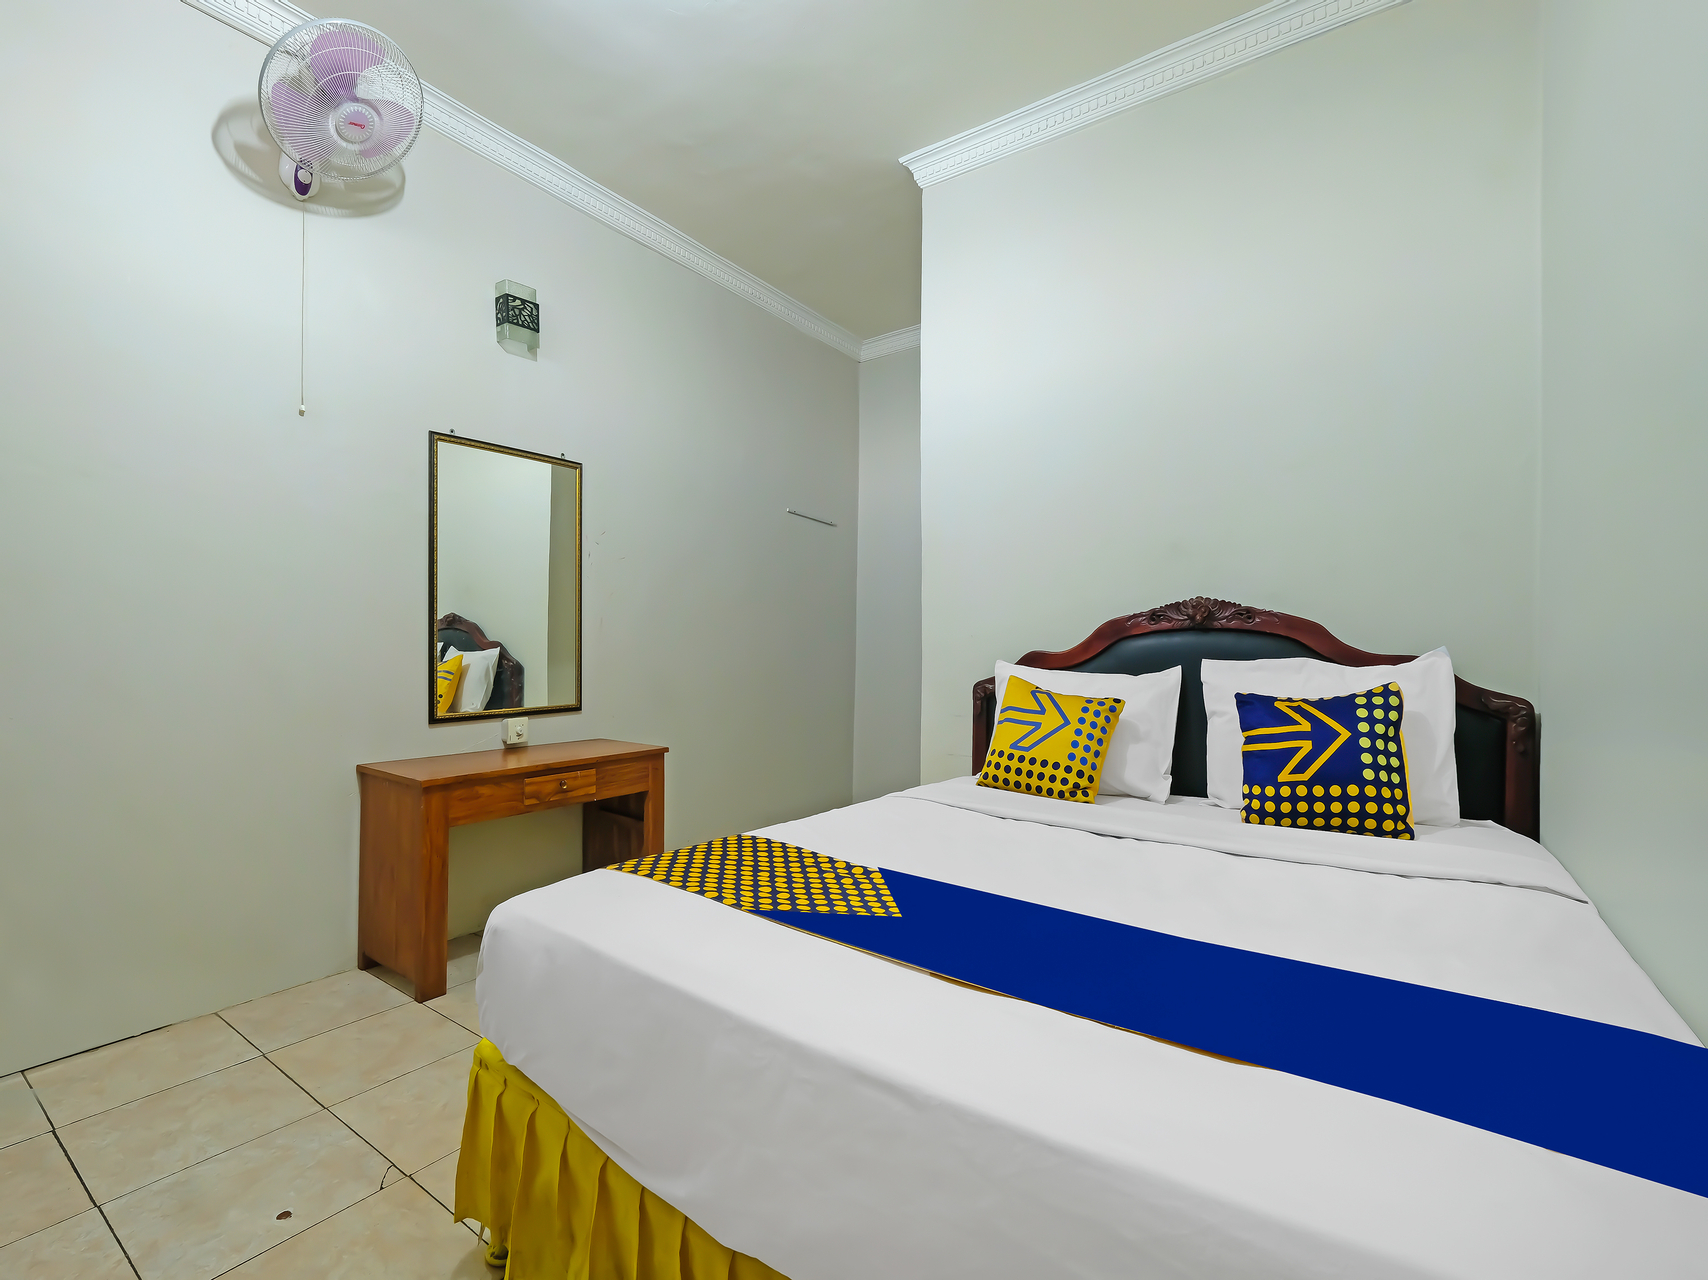 Bedroom 1, SPOT ON 91930 Hotel Citra Dewi 4 Manunggal, Semarang